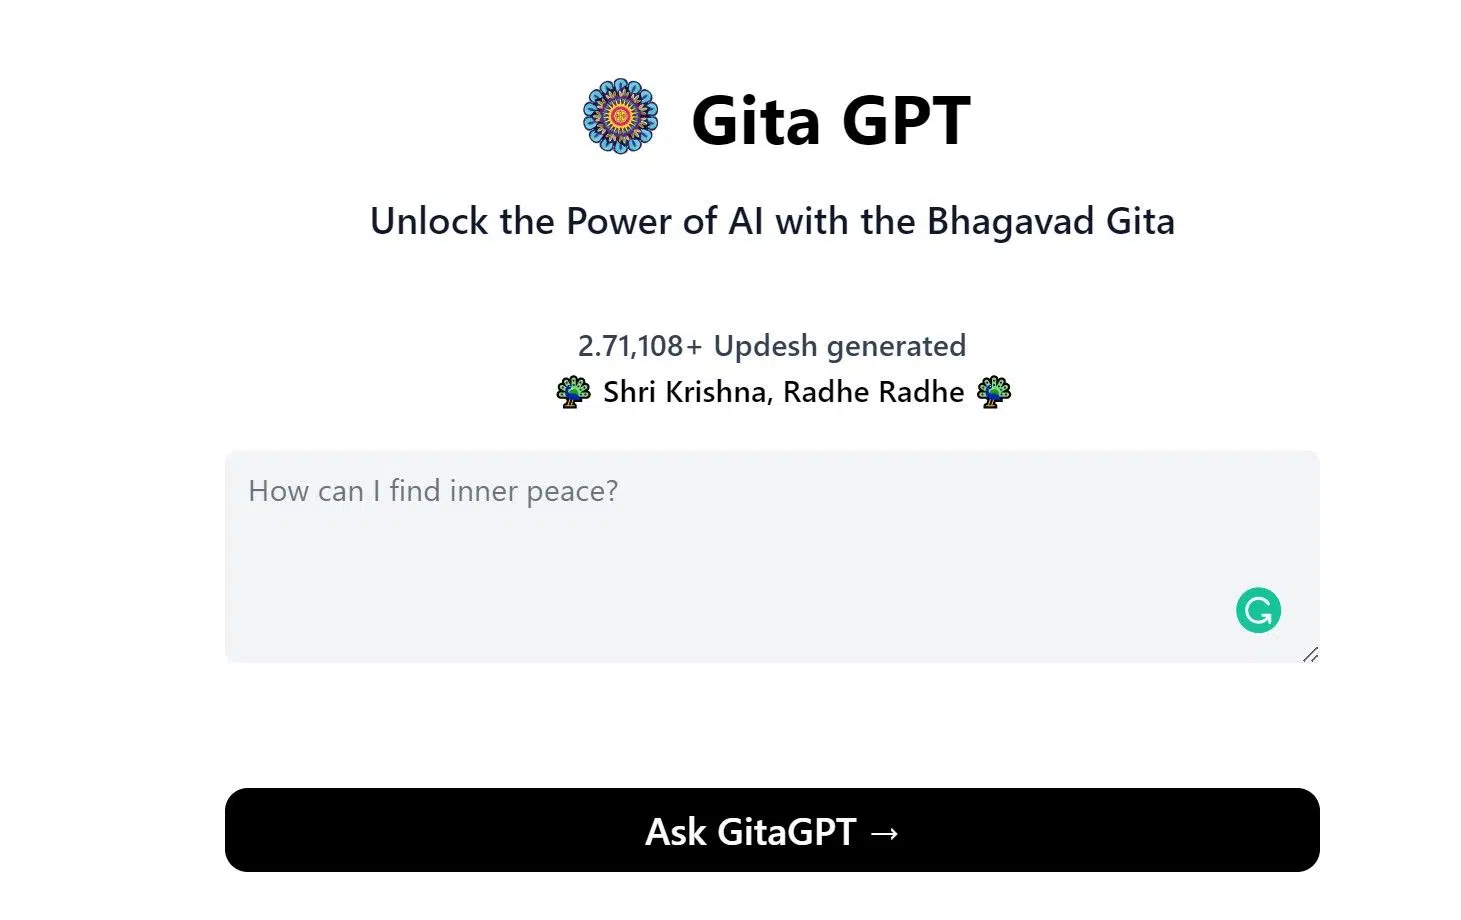 Gita GPTwebsite picture